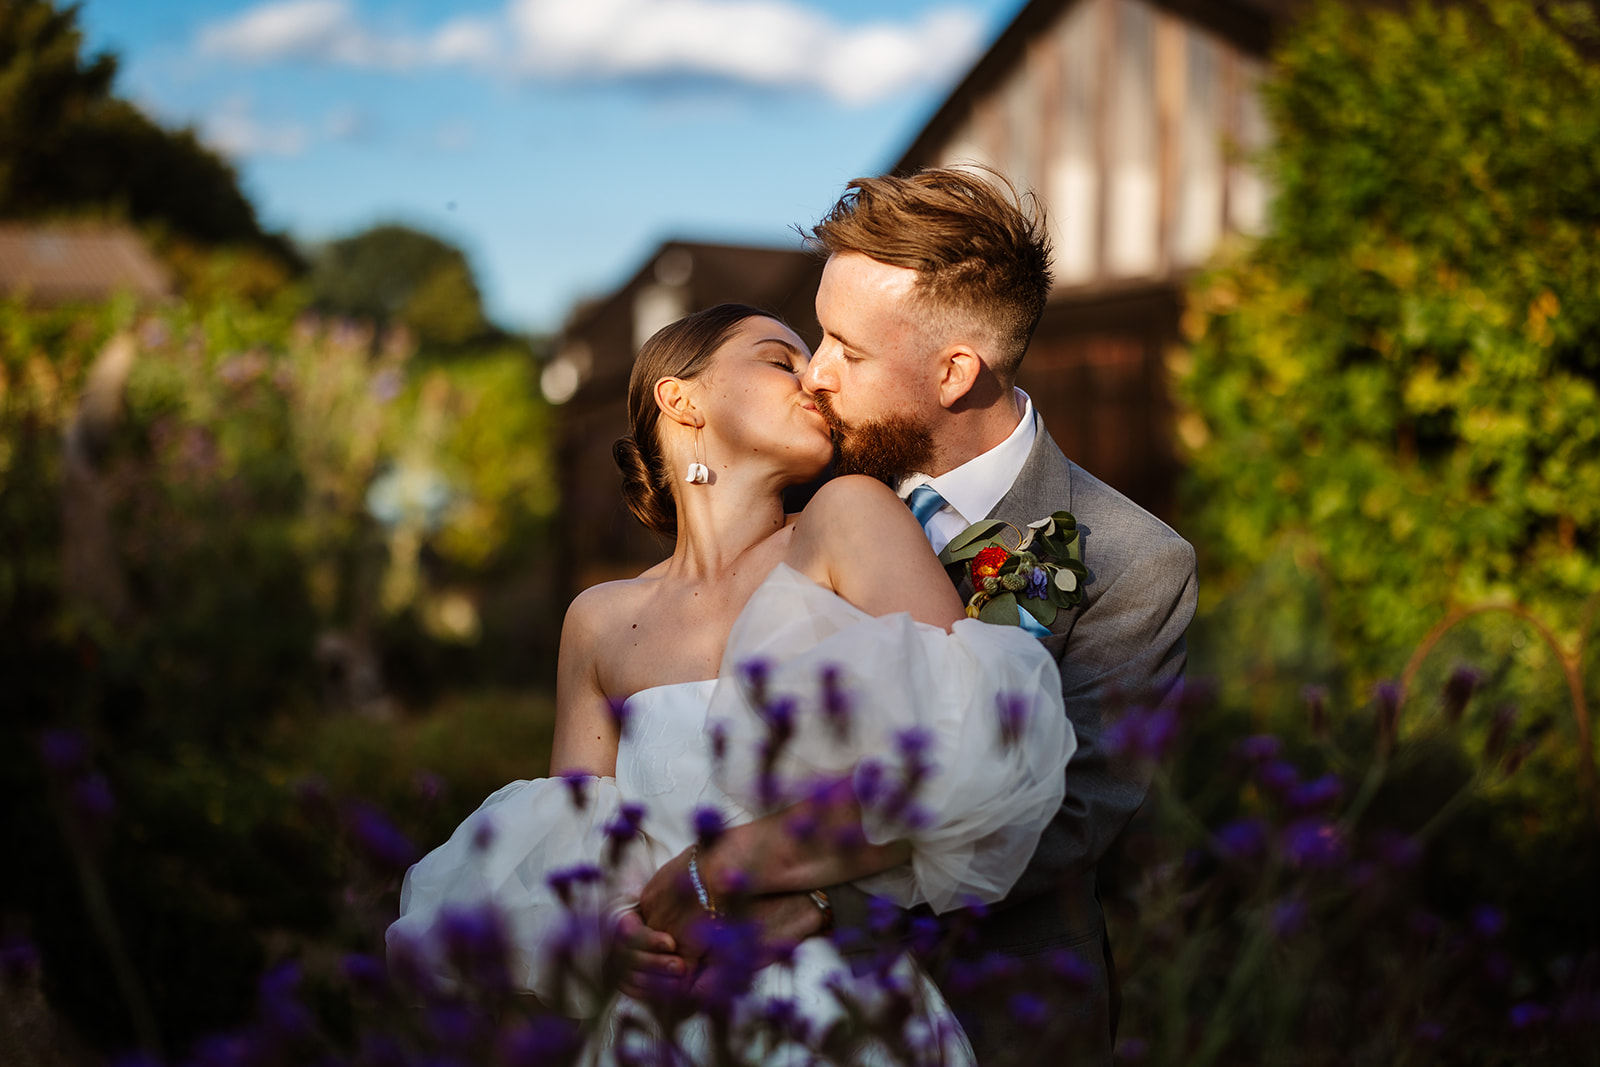 Couple kissing in garden 